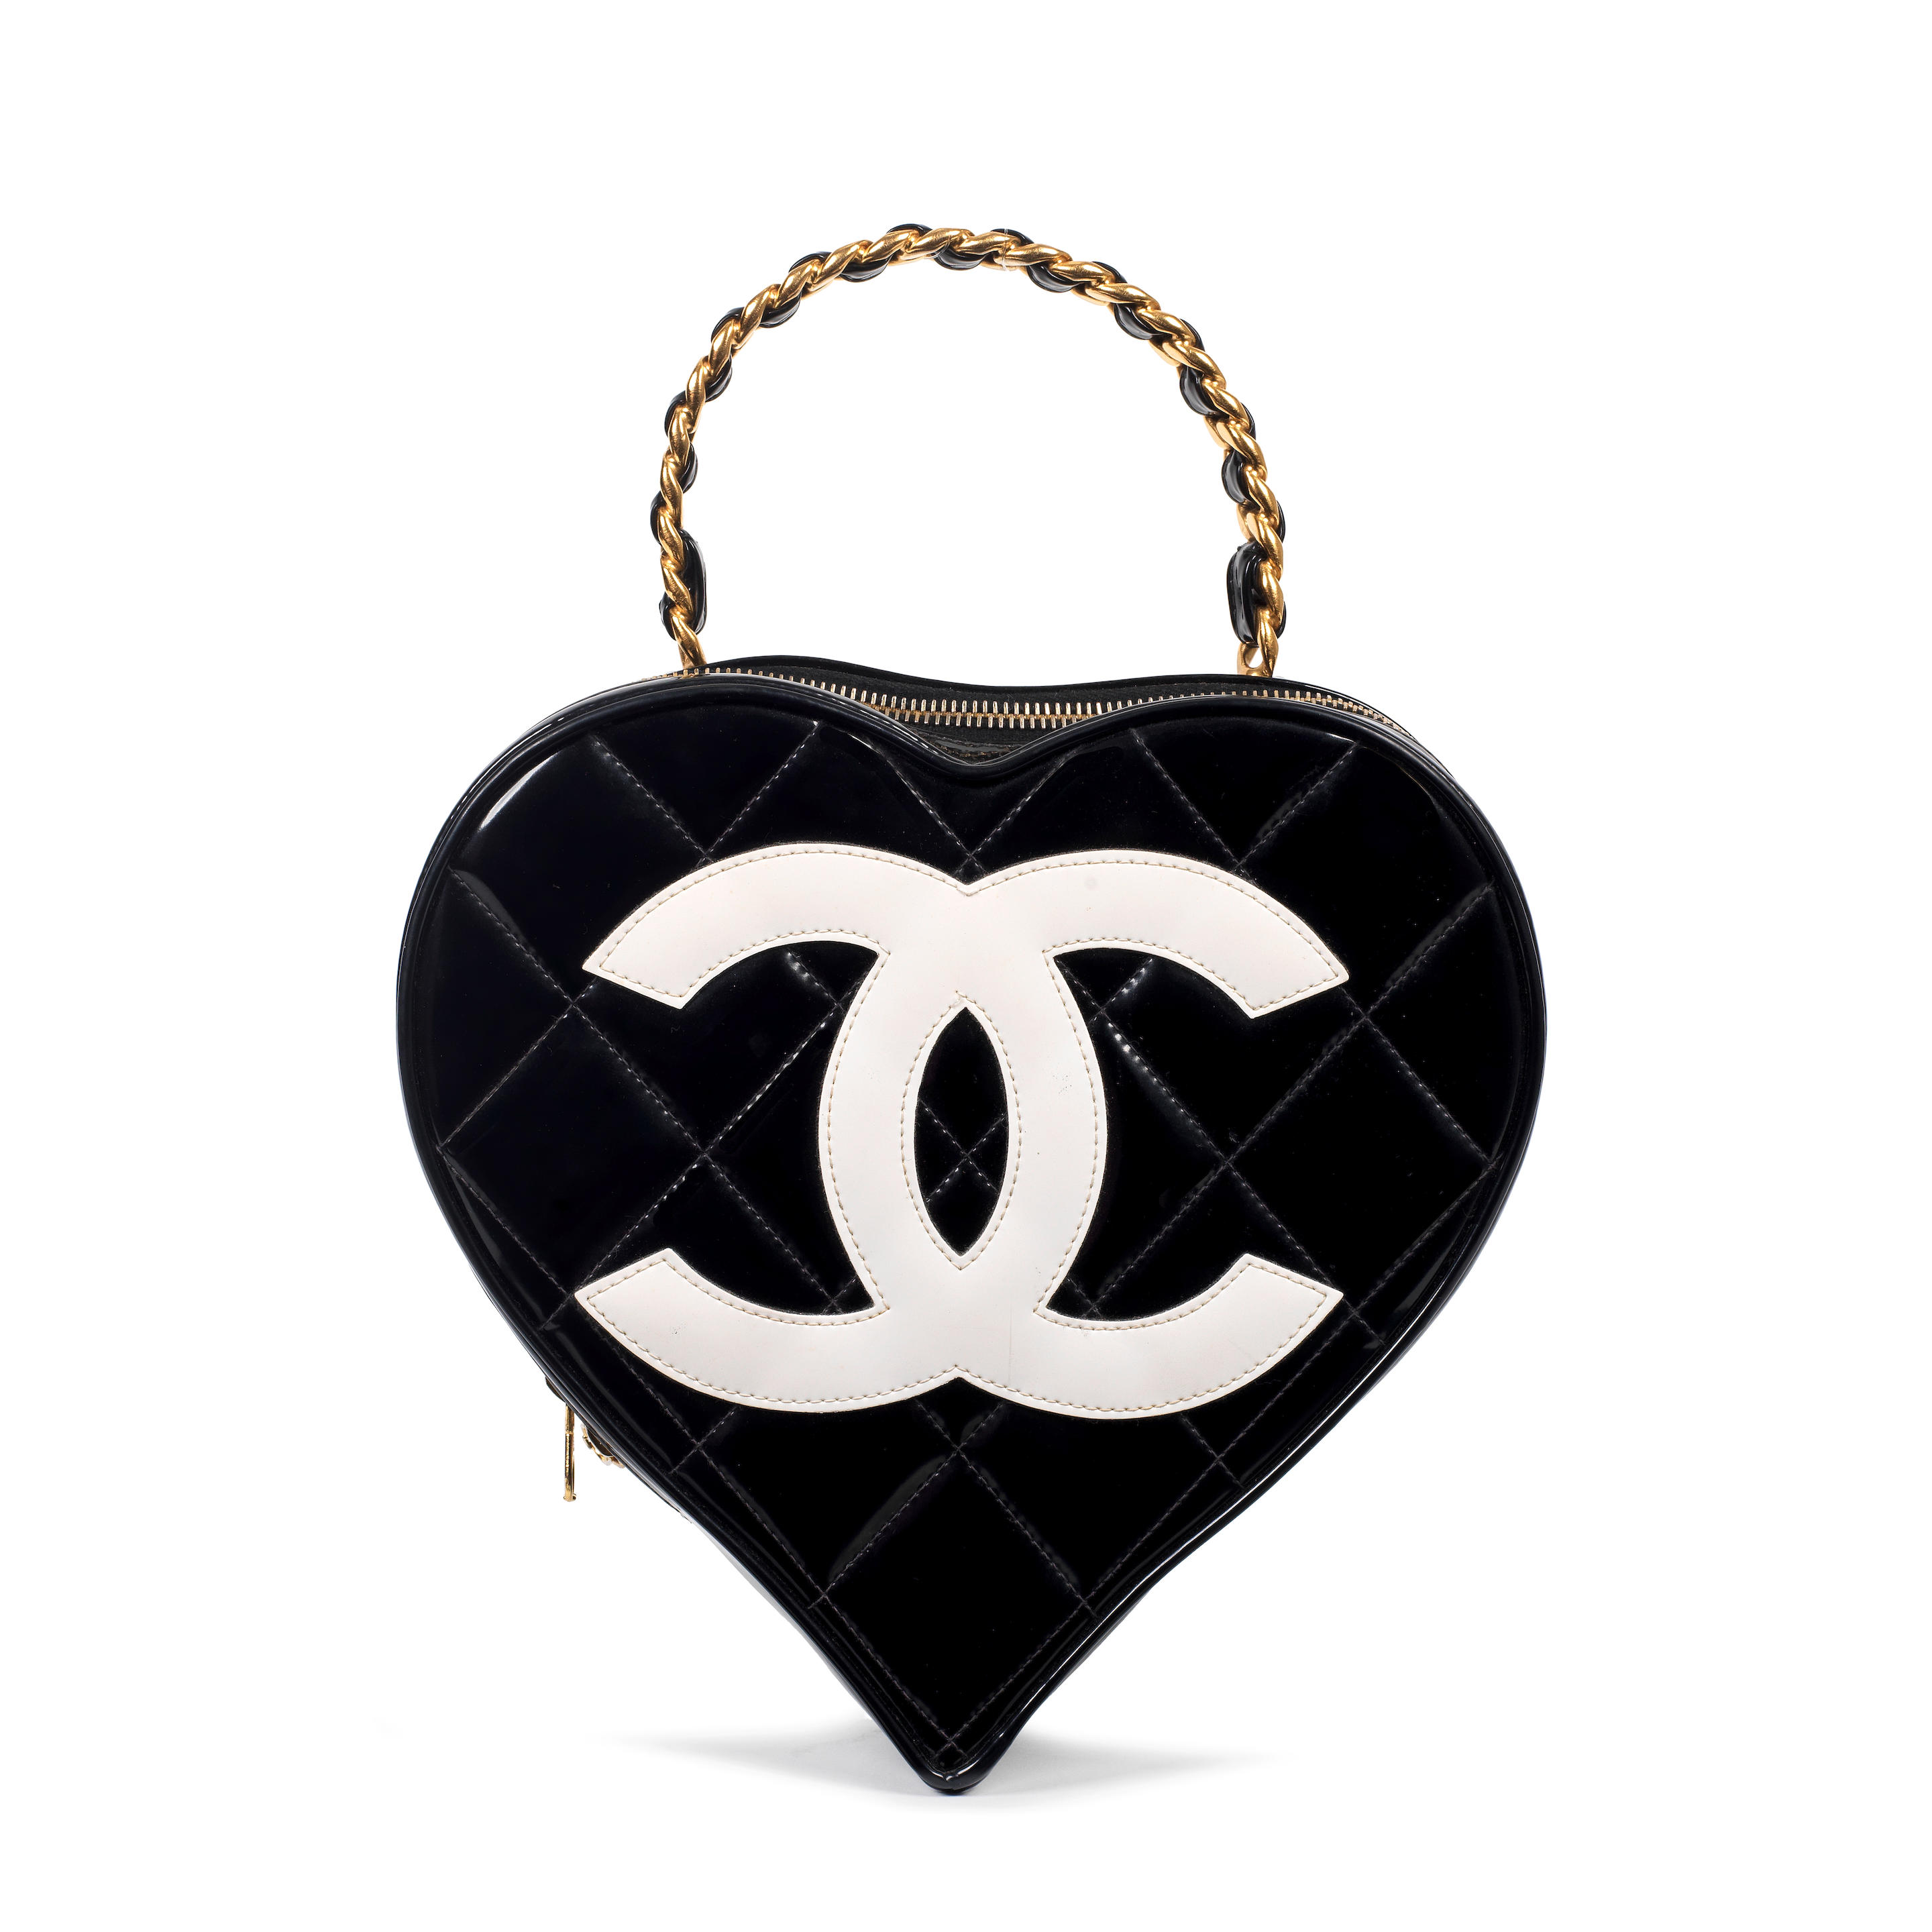 Bonhams : Karl Lagerfeld for Chanel a Black Patent Leather Heart